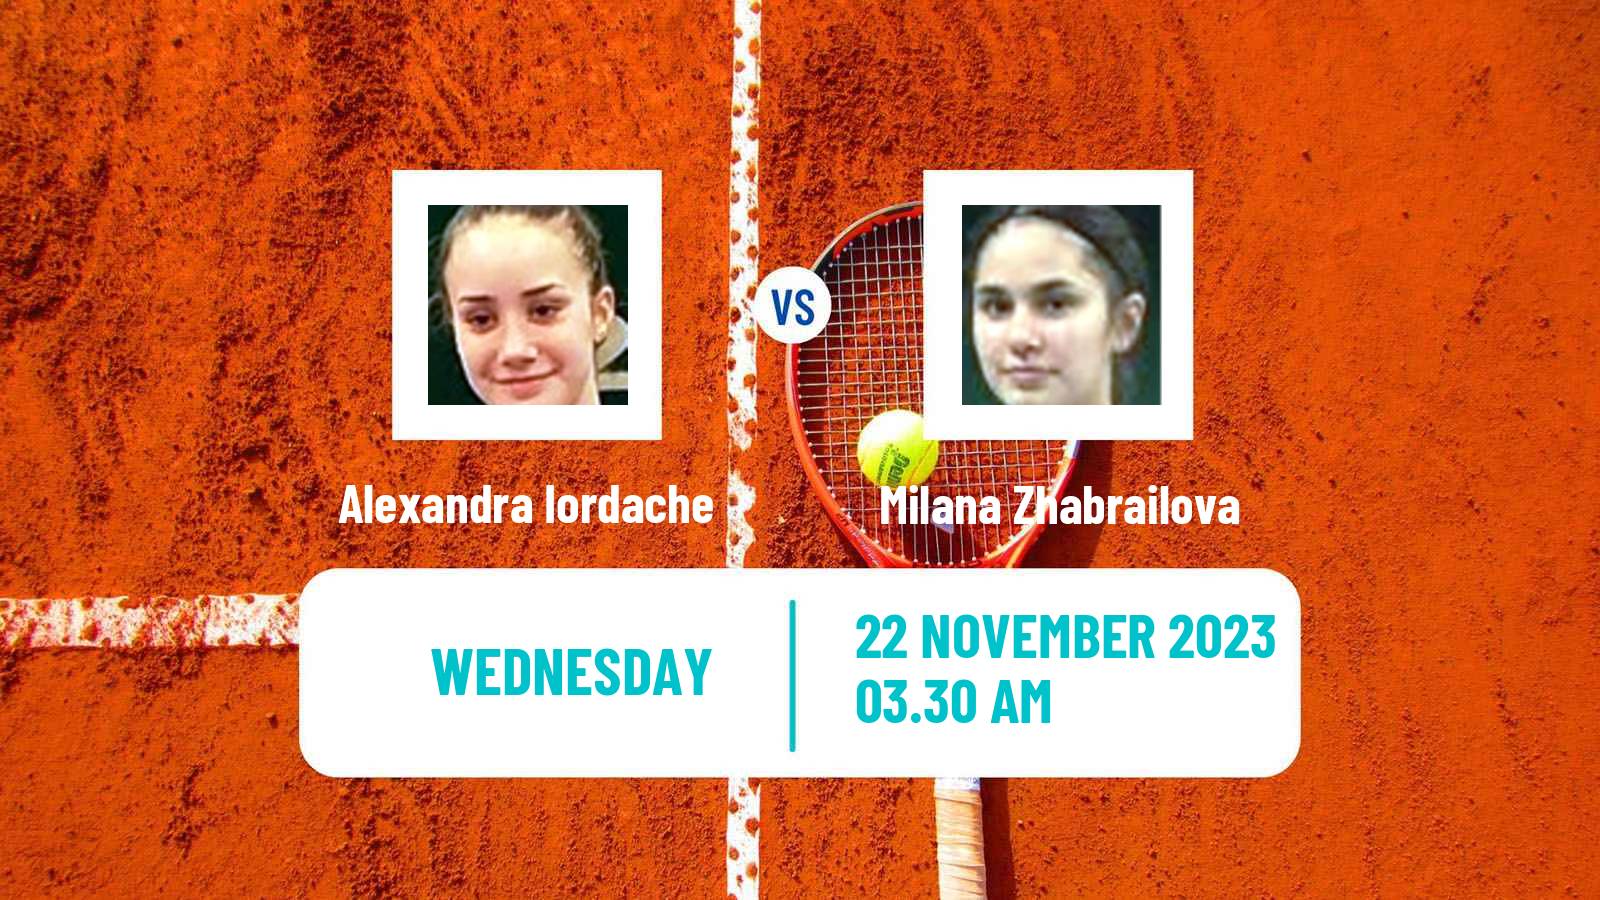 Tennis ITF W15 Monastir 41 Women Alexandra Iordache - Milana Zhabrailova